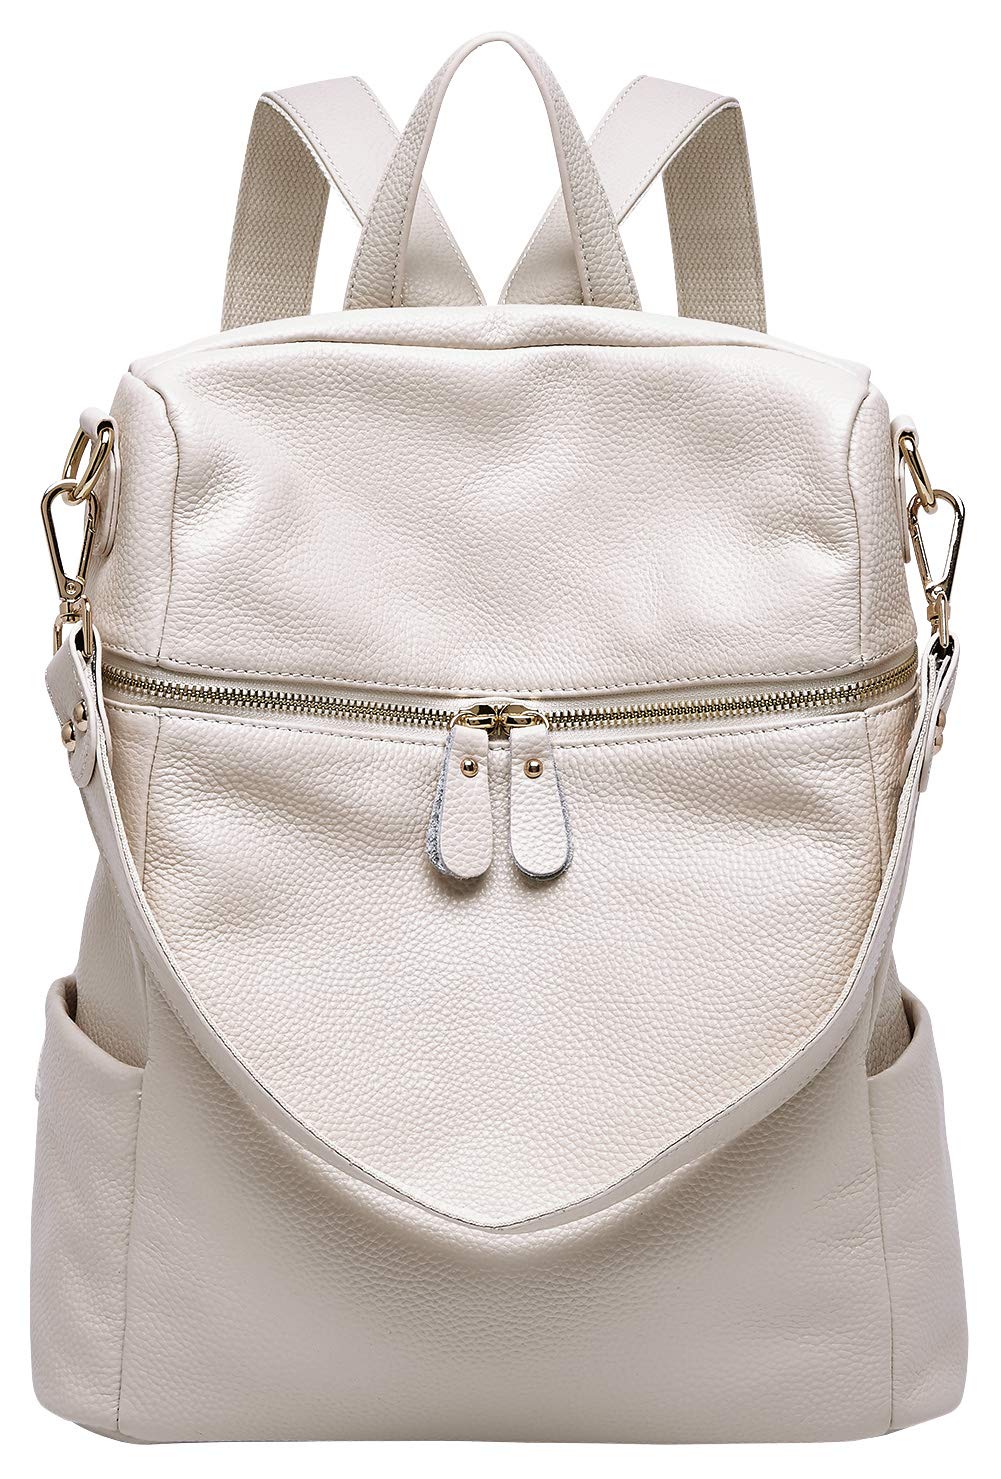 Banuce Fashion Full Grains Italian Leather Convertible Hobo Purses and  Handbags for Women Crossbody Shoulder Bag